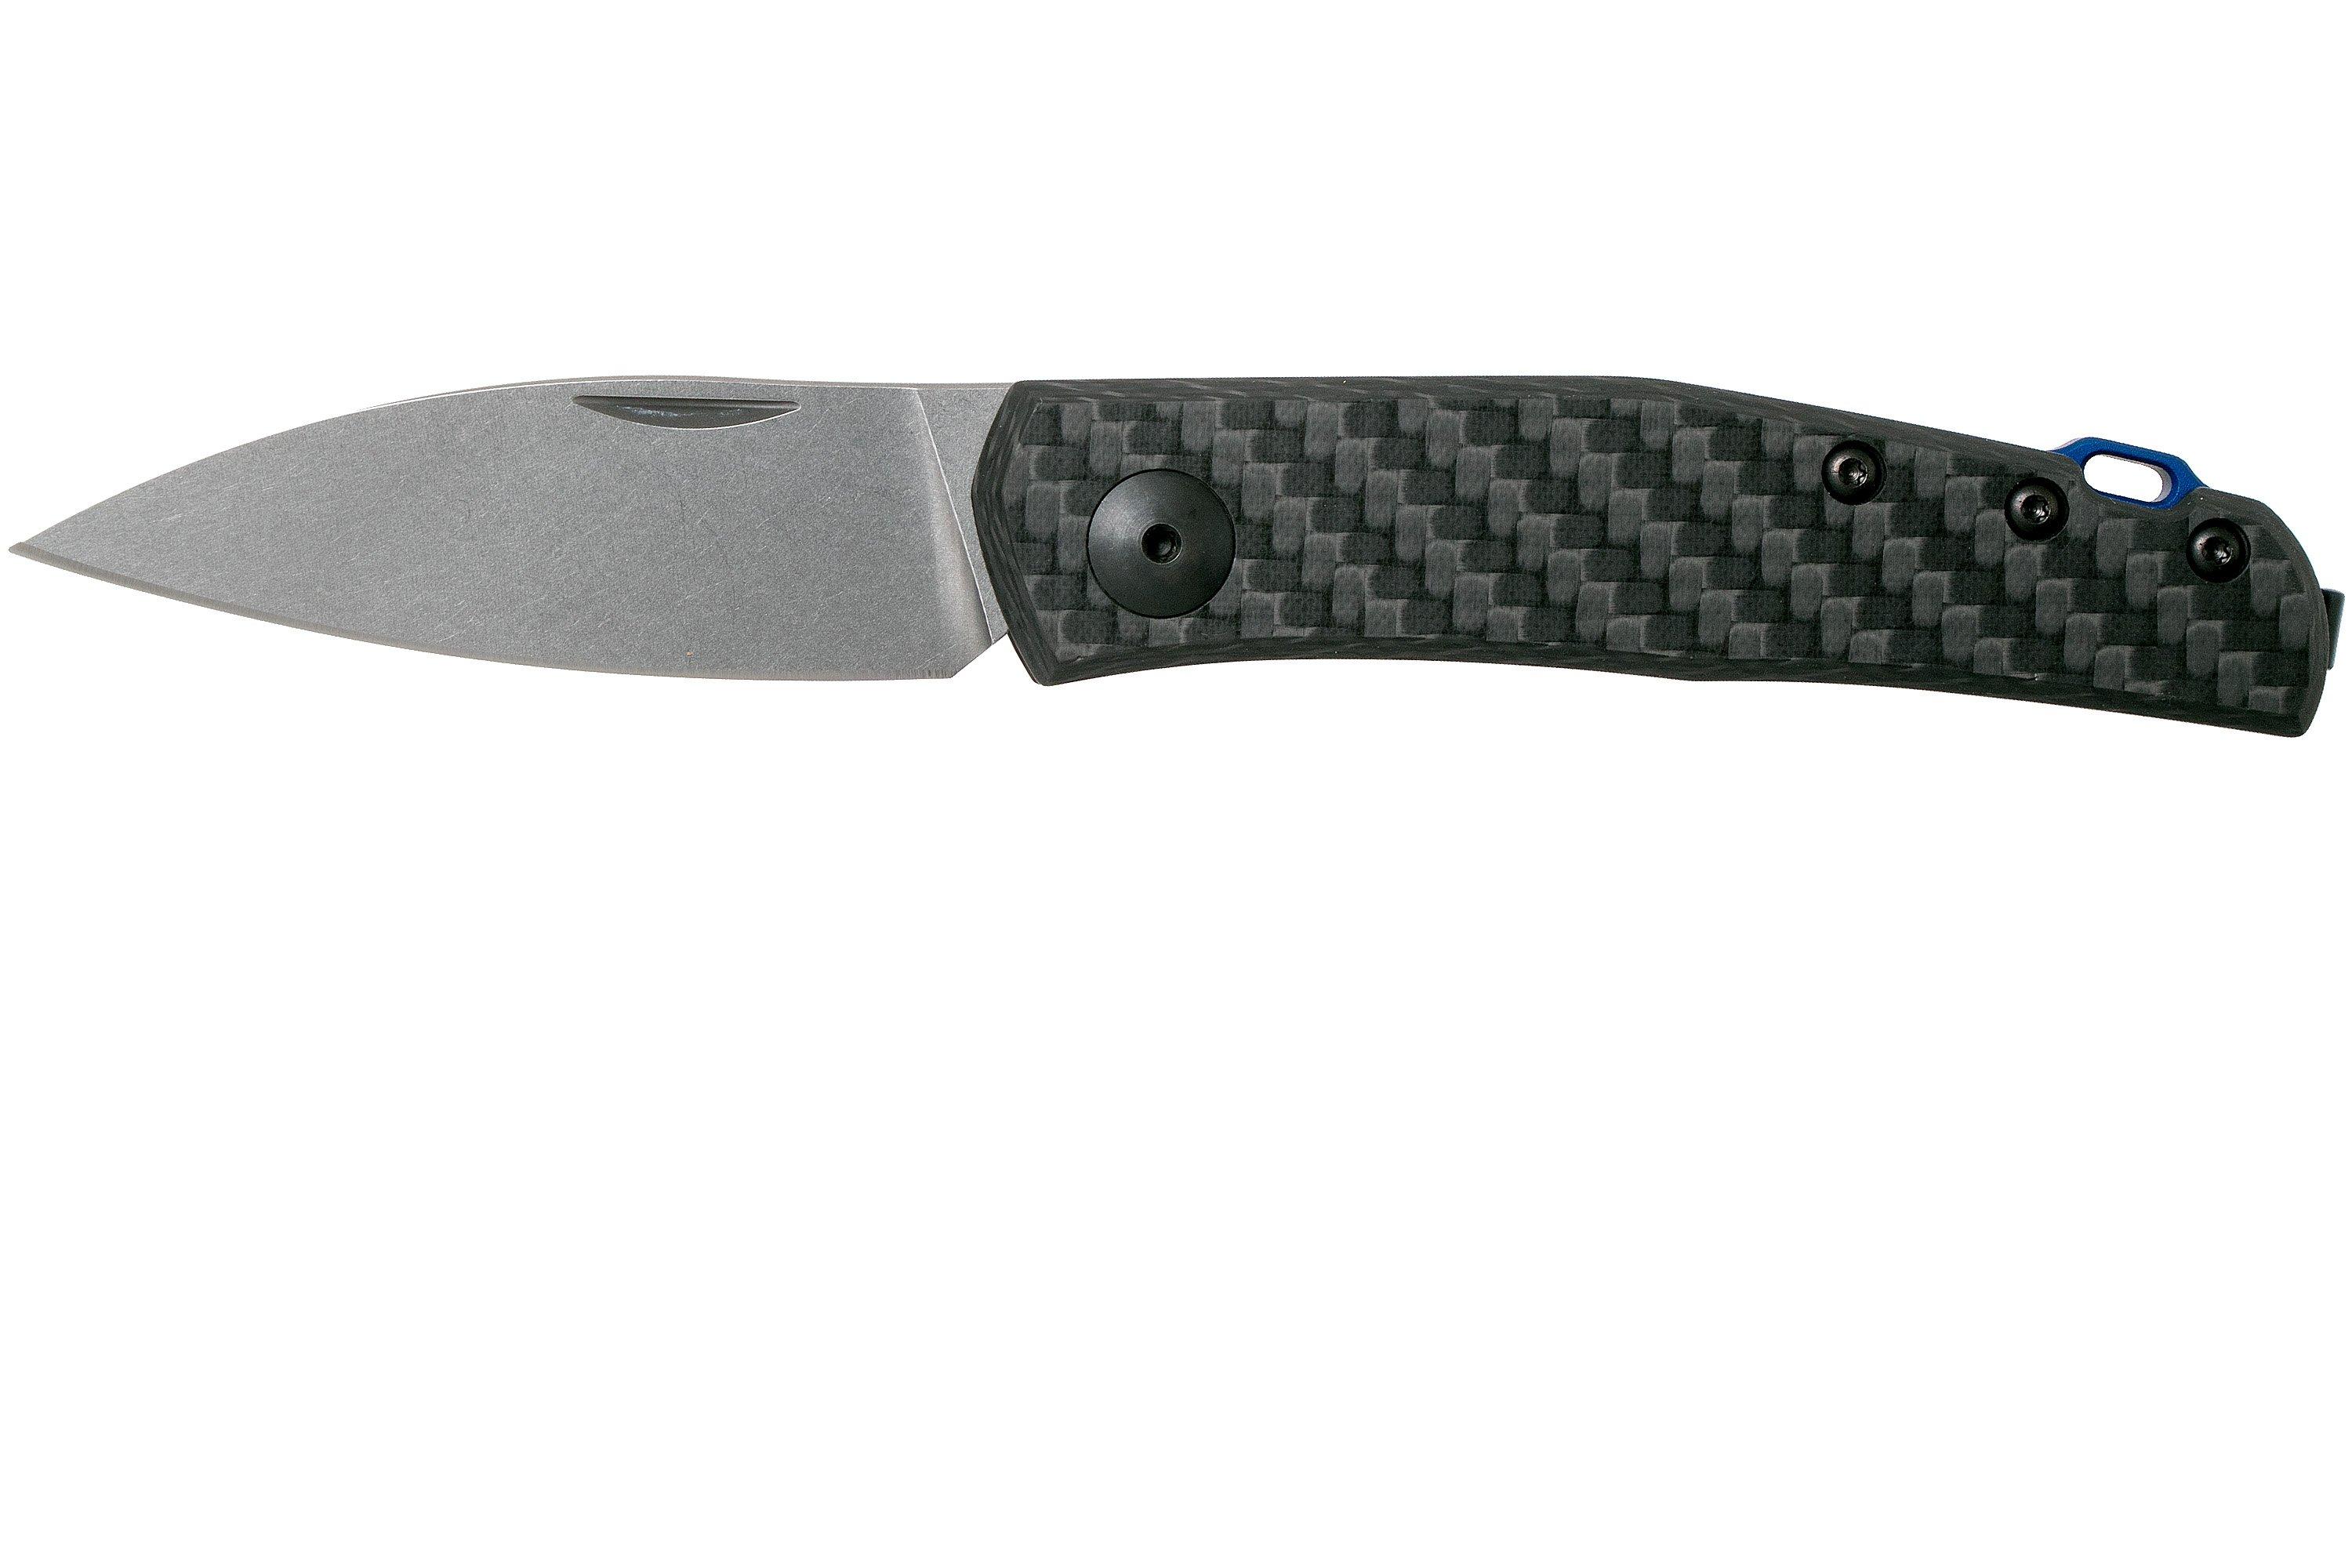 Zero Tolerance 0235 slipjoint pocket knife, Jens Anso design 